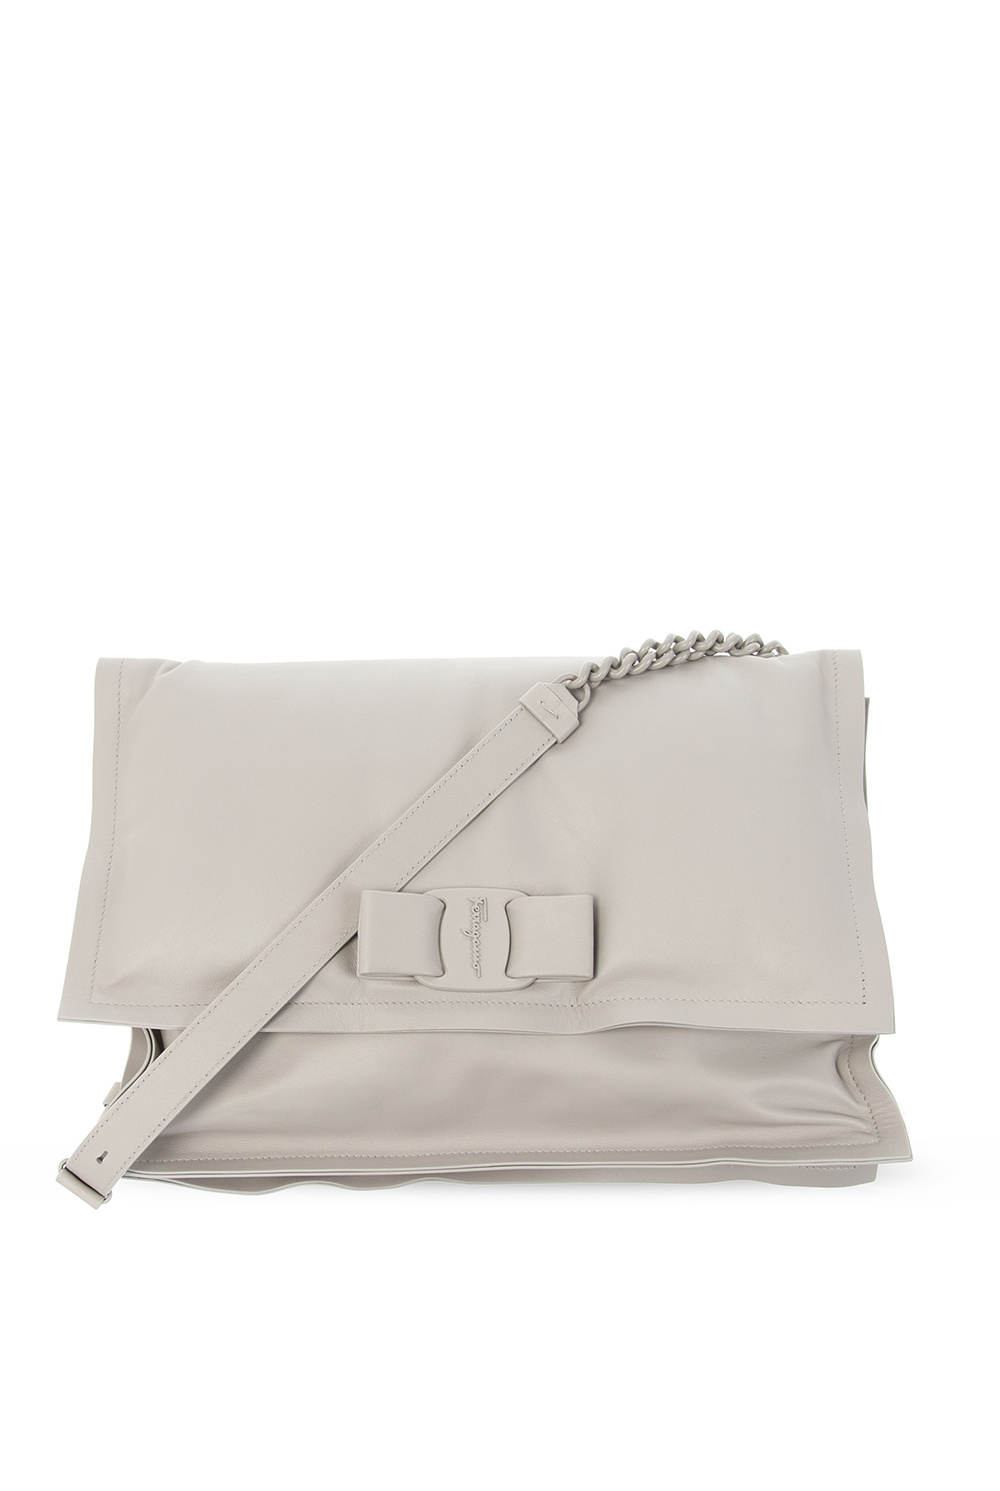 Salvatore Ferragamo 'Viva Bow Small' shoulder bag | Women's Bags 